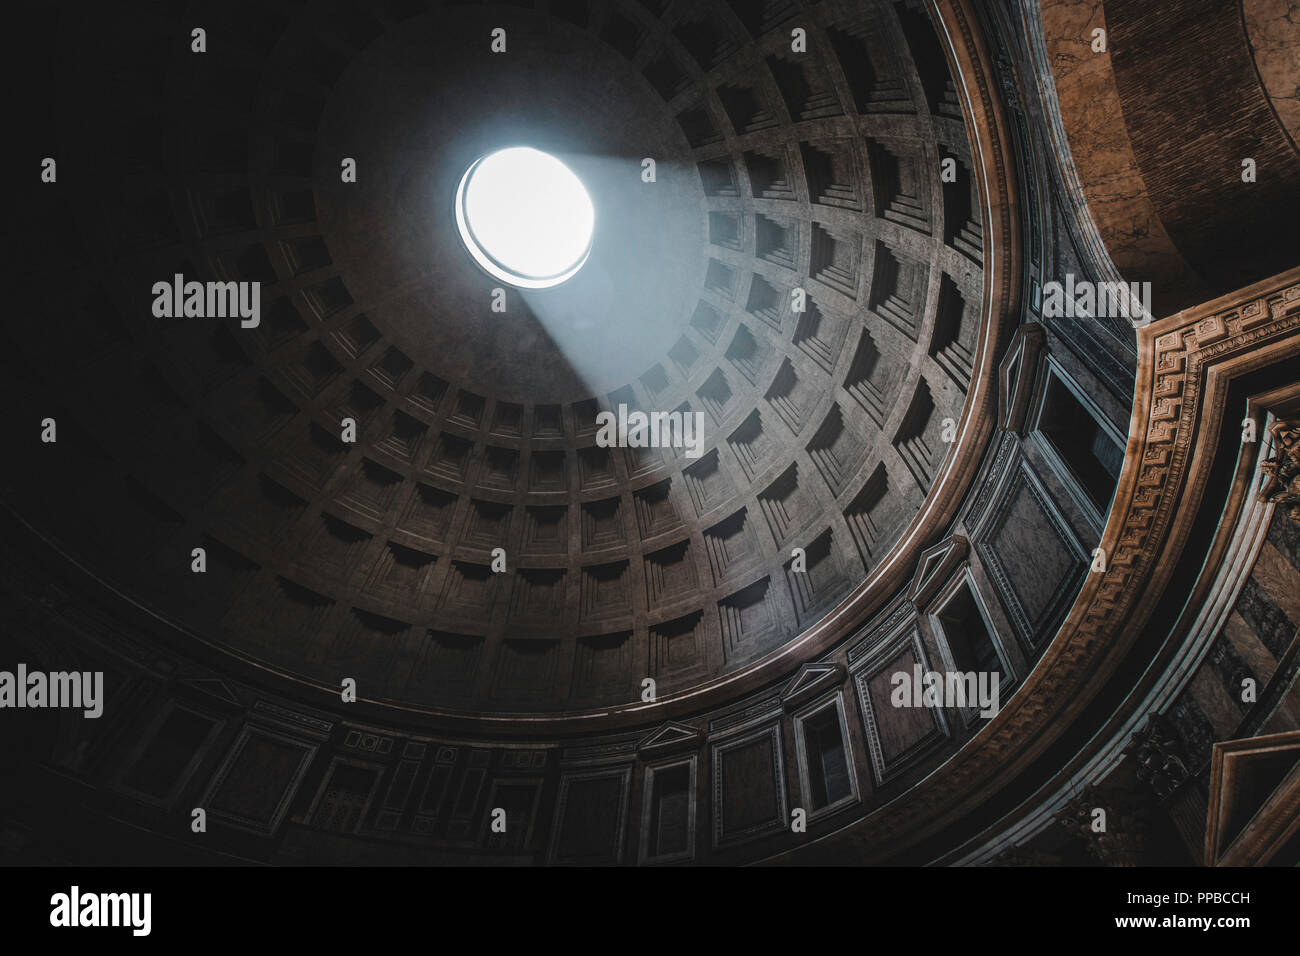 Light streak lighting up the Pantheon in Rome. Stock Photo